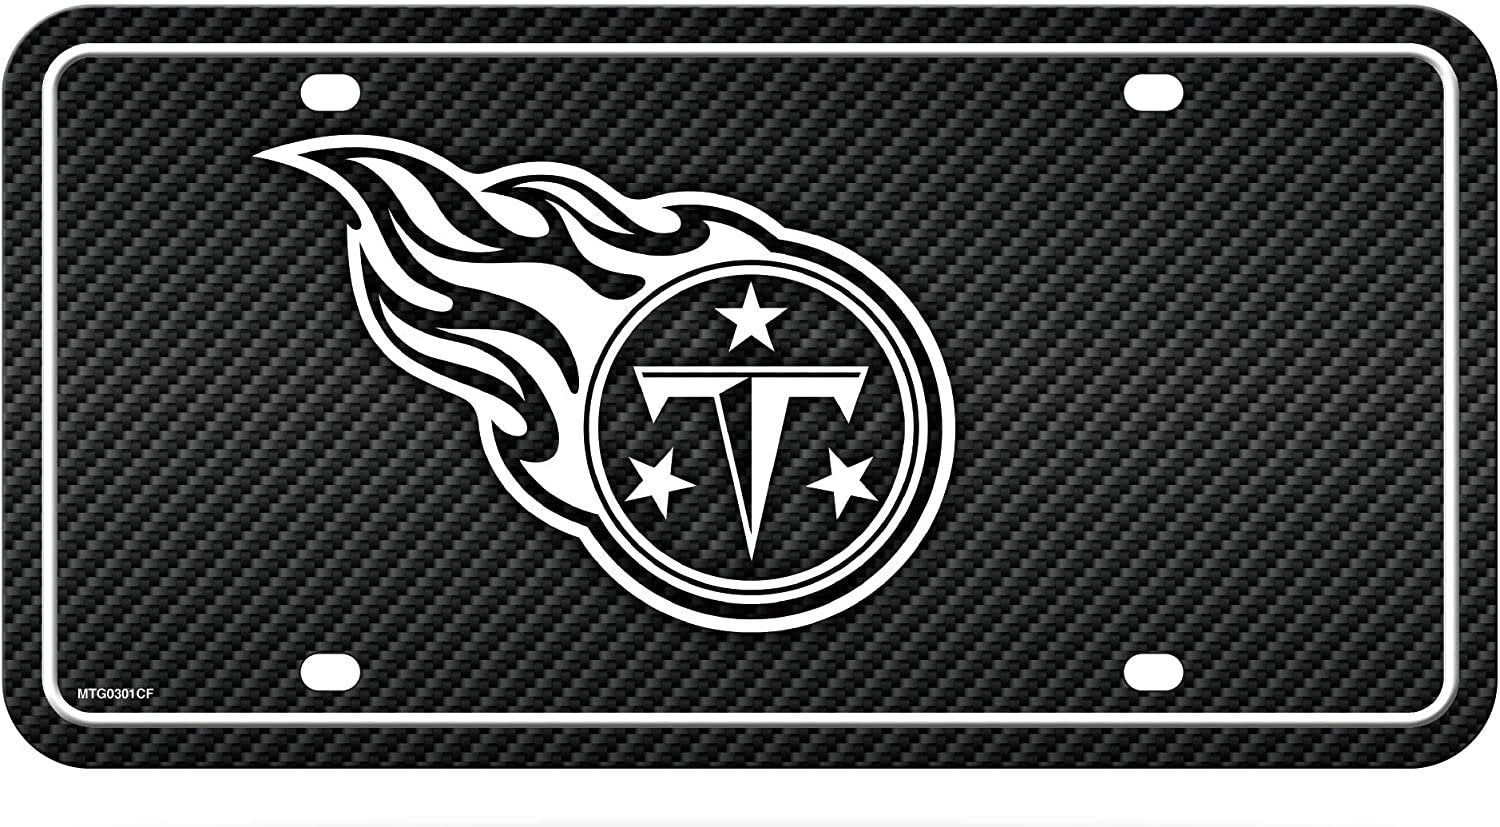 Tennessee Titans Metal Auto Tag License Plate, Carbon Fiber Design, 6x12 Inch